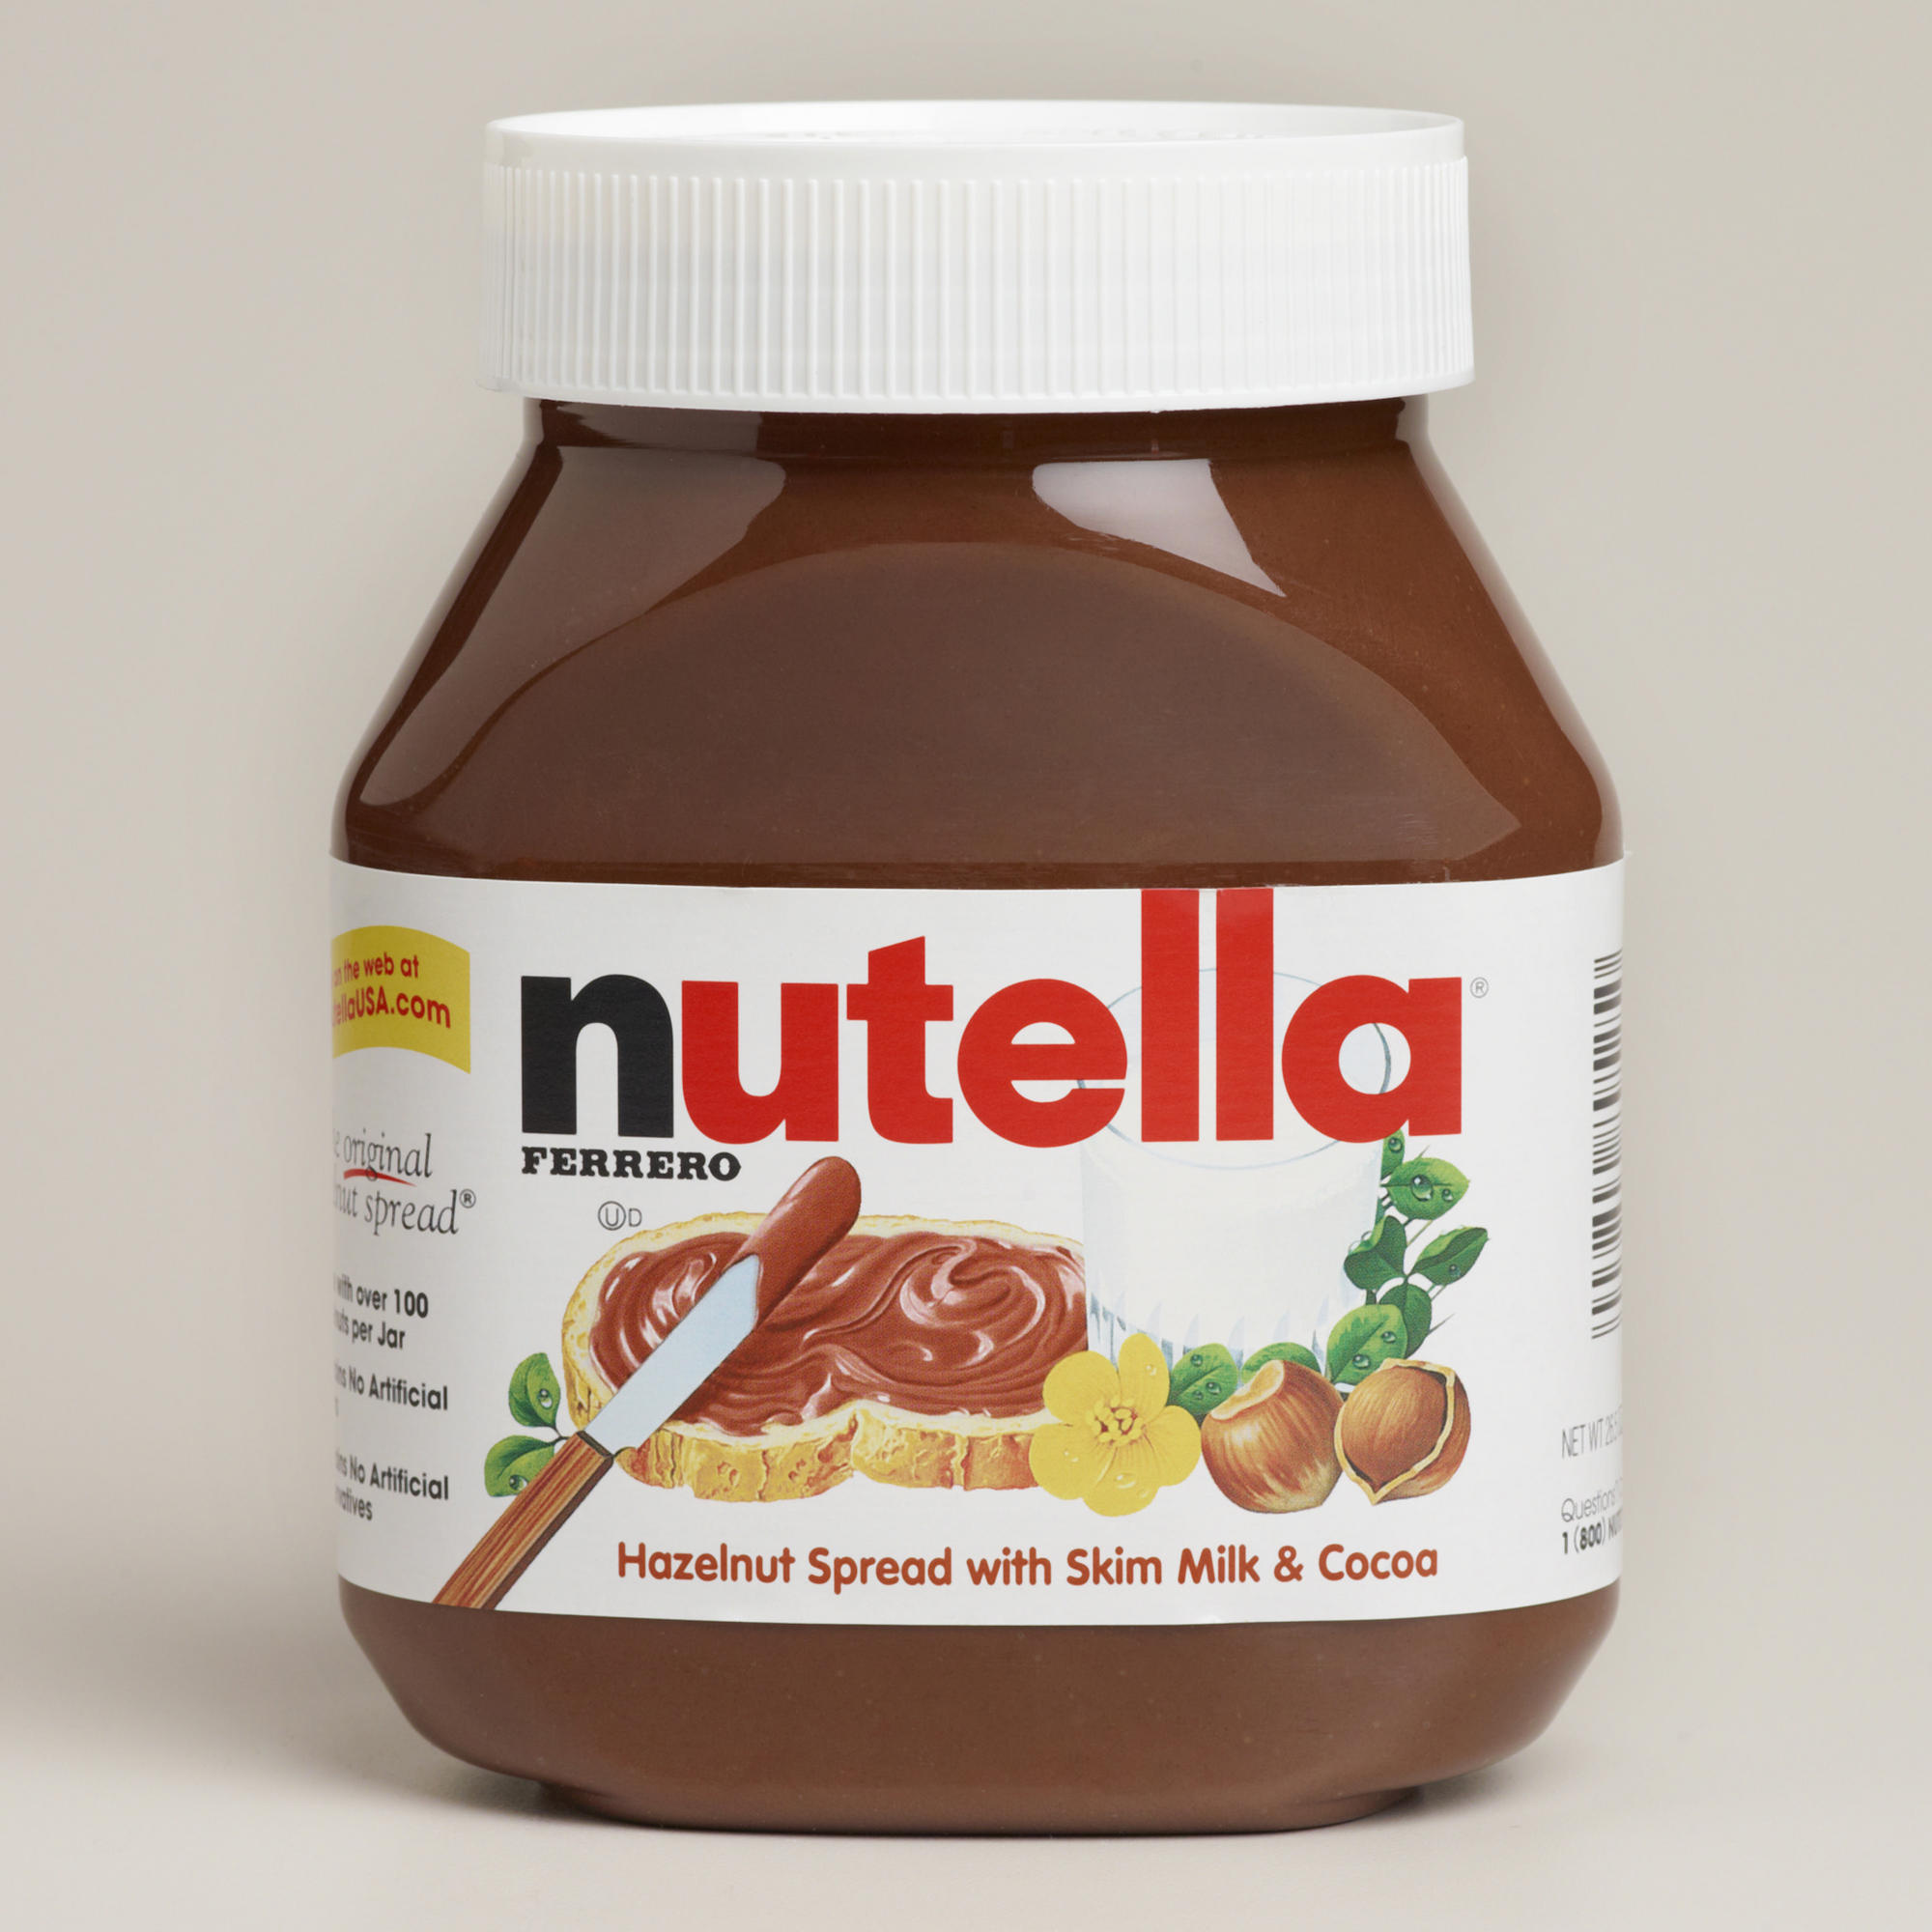 Nutella Has Brain Fart, Sends Cease And Desist to Biggest Fan